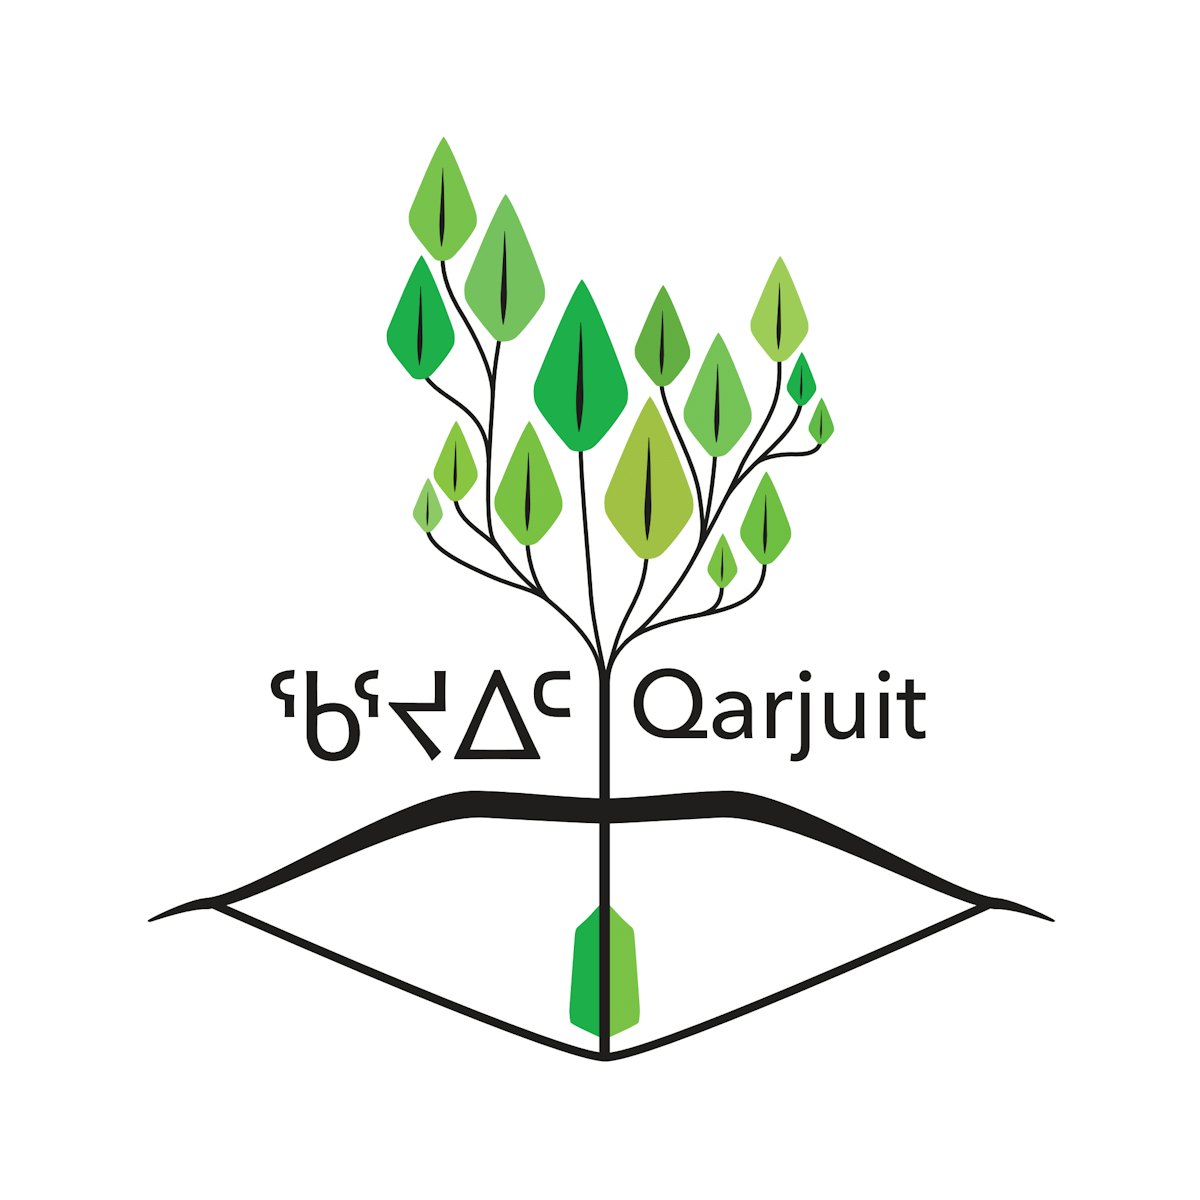 Qarjuit Youth Council